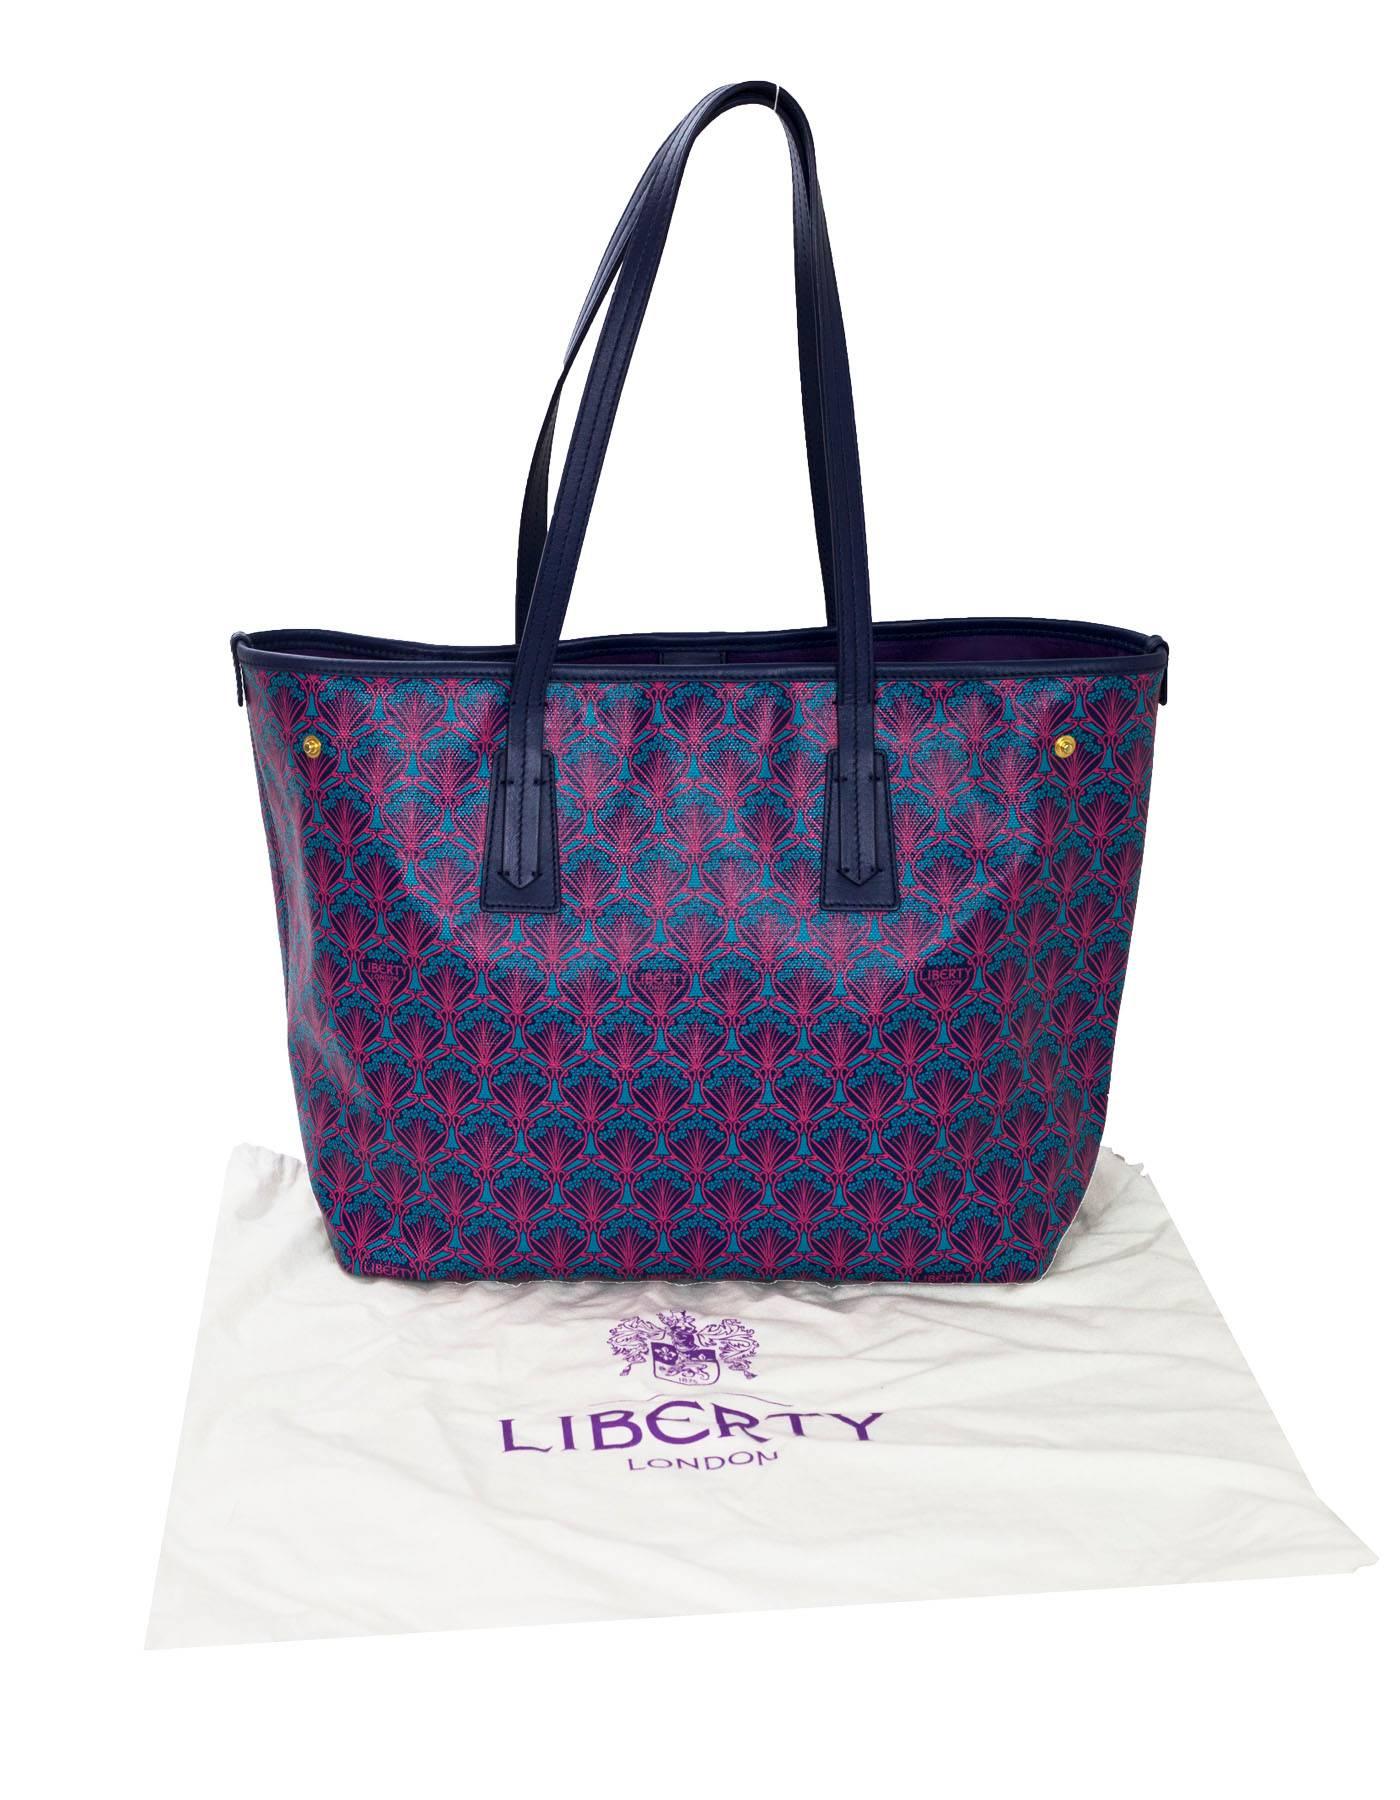 Liberty London Pink & Blue Marlborough Iphis-Print Tote Bag with Dust Bag 2